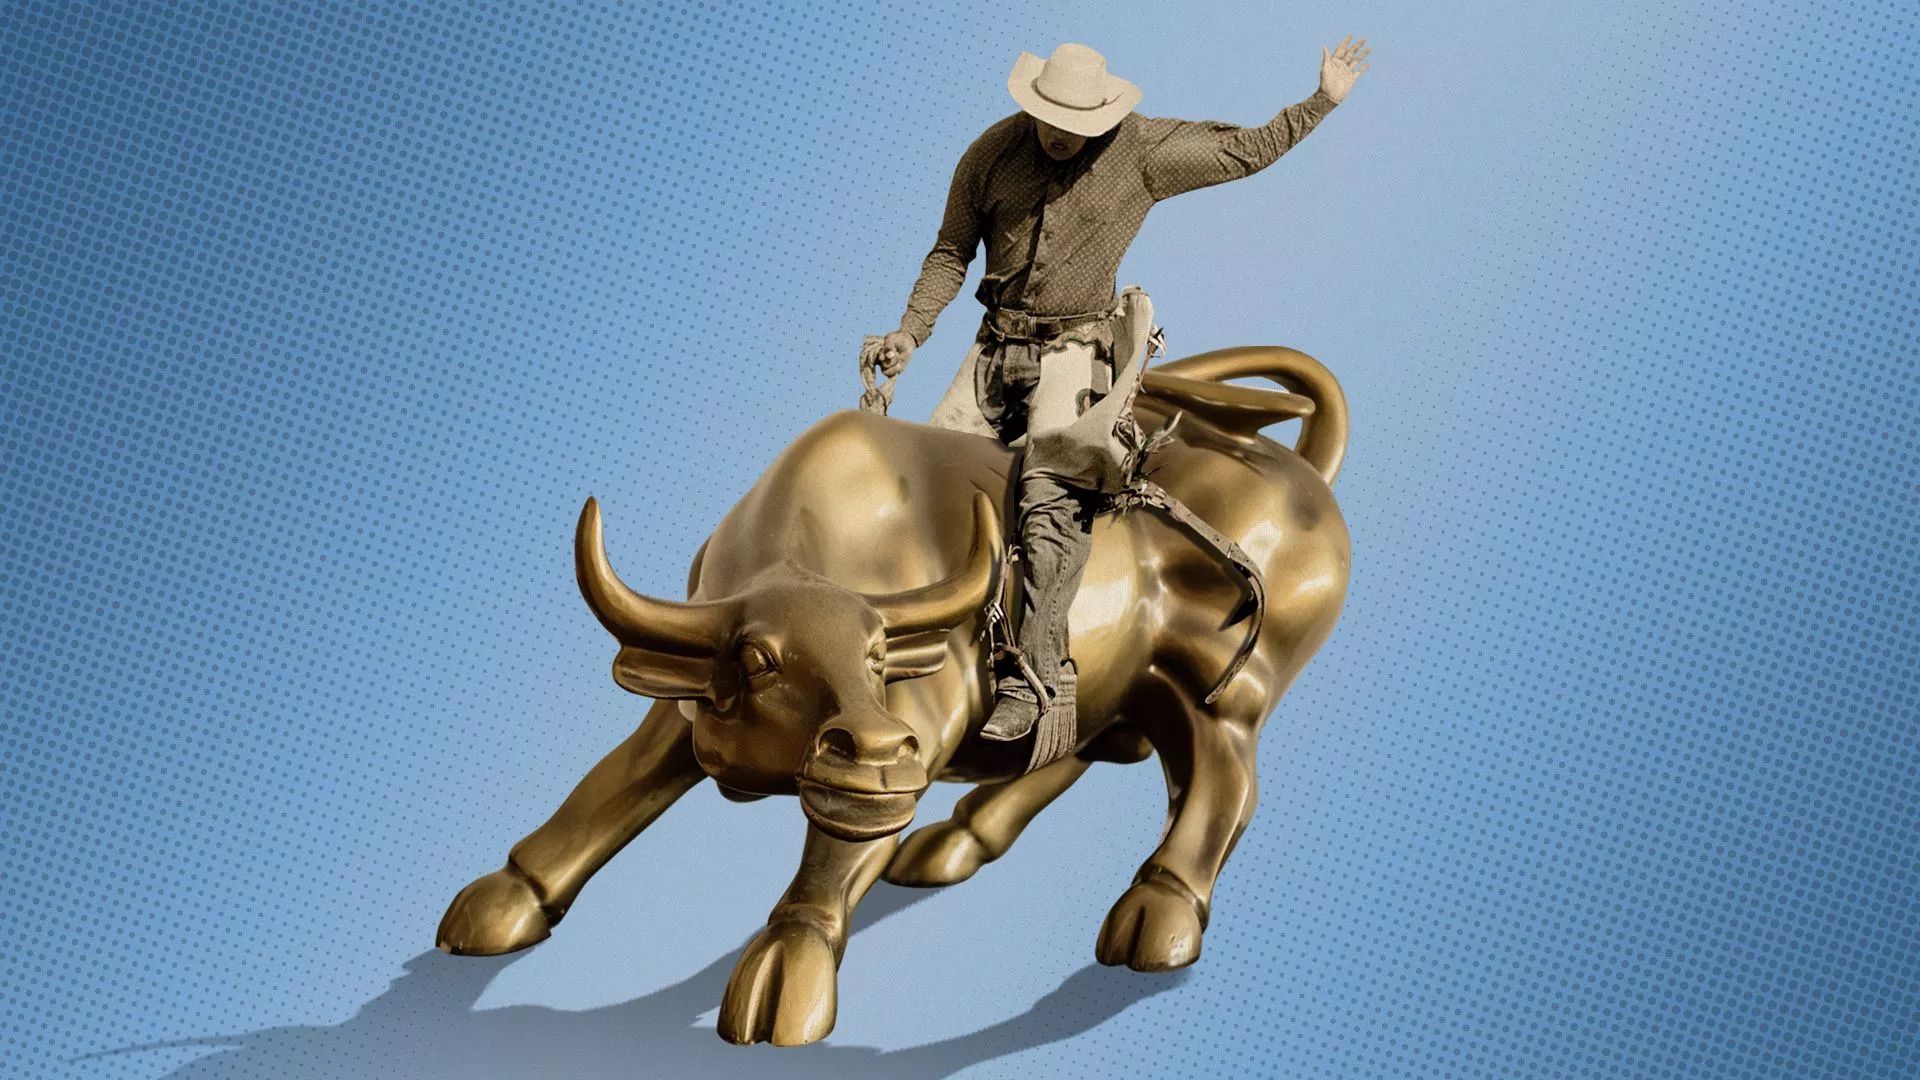 A cowboy riding the Wall Street bull